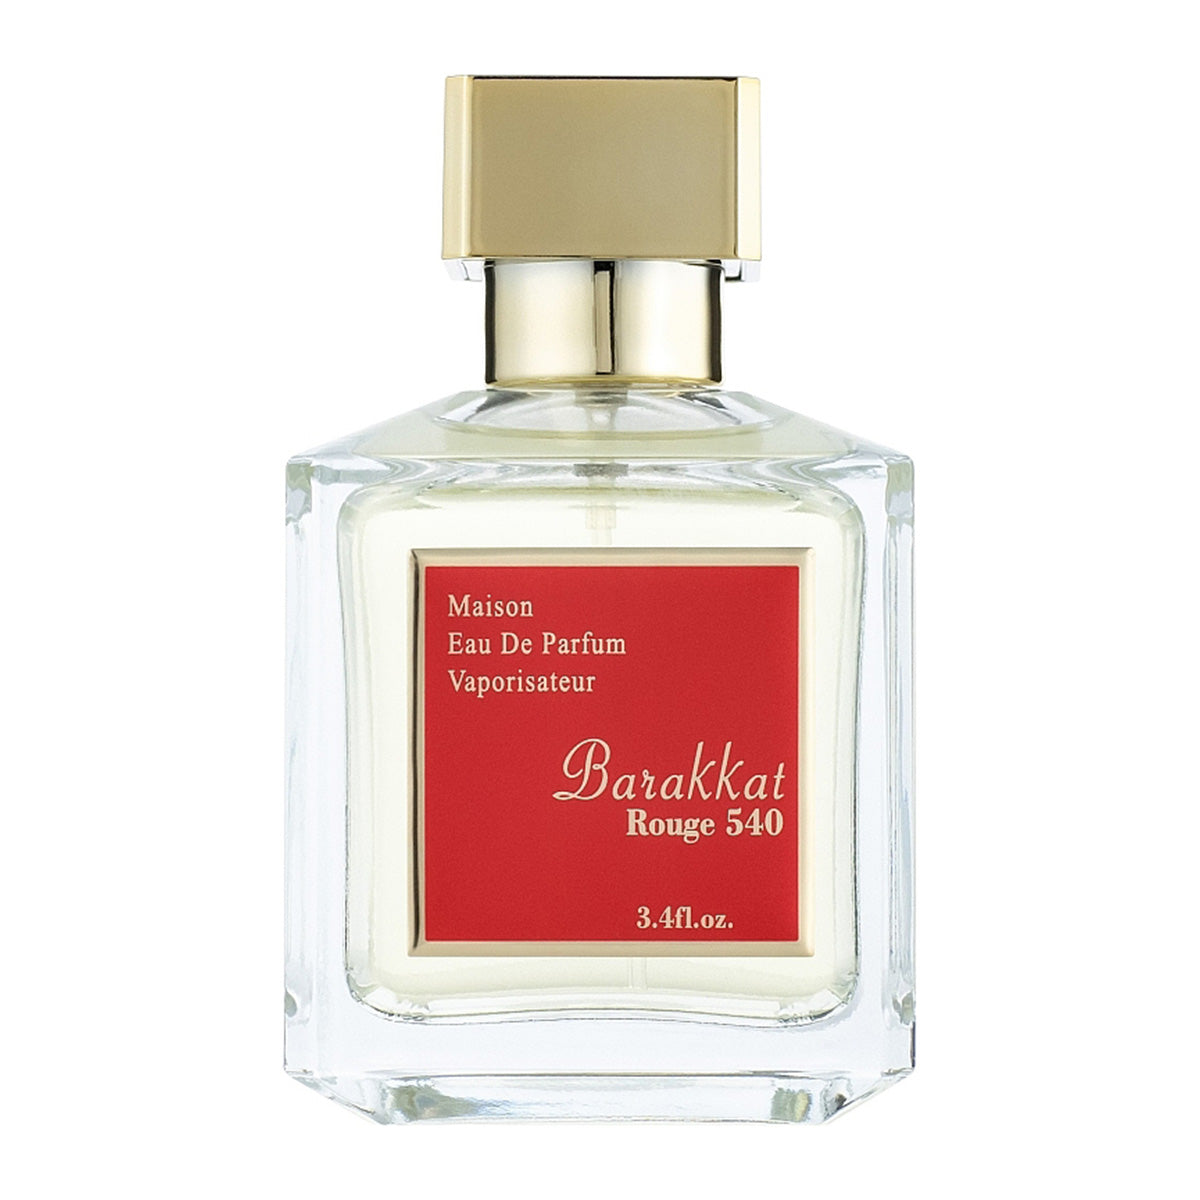 Barakkat Rouge 540 Maison Eau de Parfum 100ml Fragrance World-Perfume Heaven